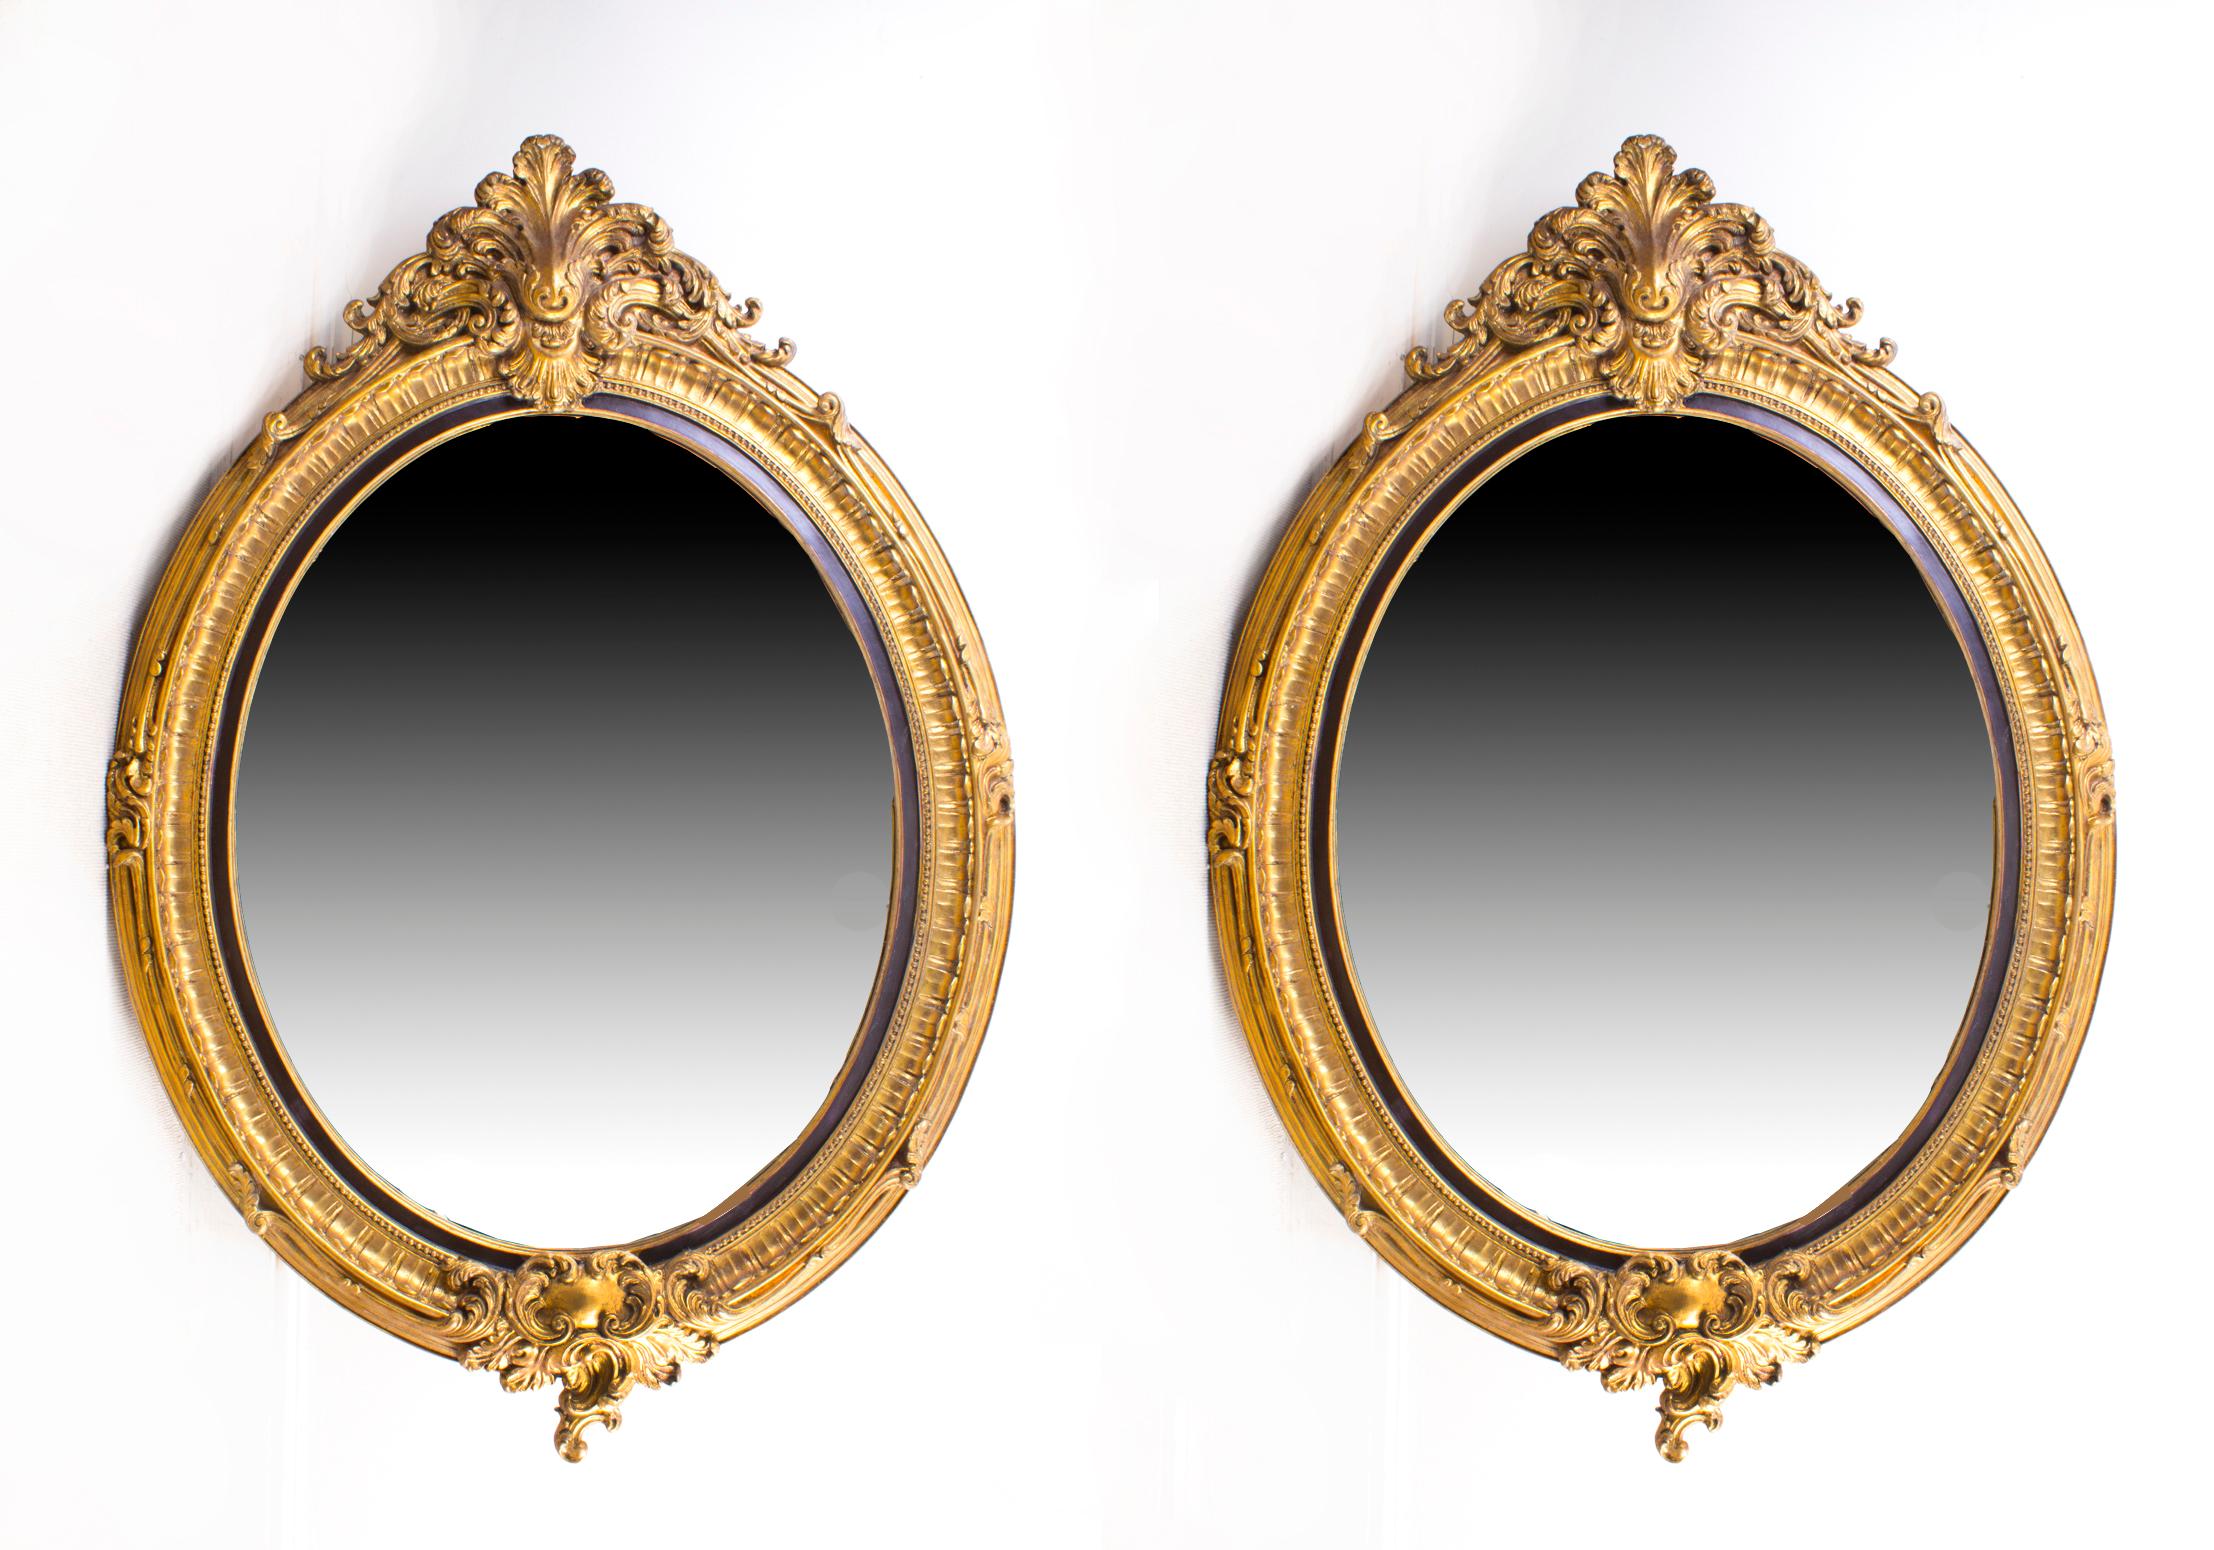 Rococo Beautiful Large Italian Gilded Decorative Oval Mirror 150 x 103 cm